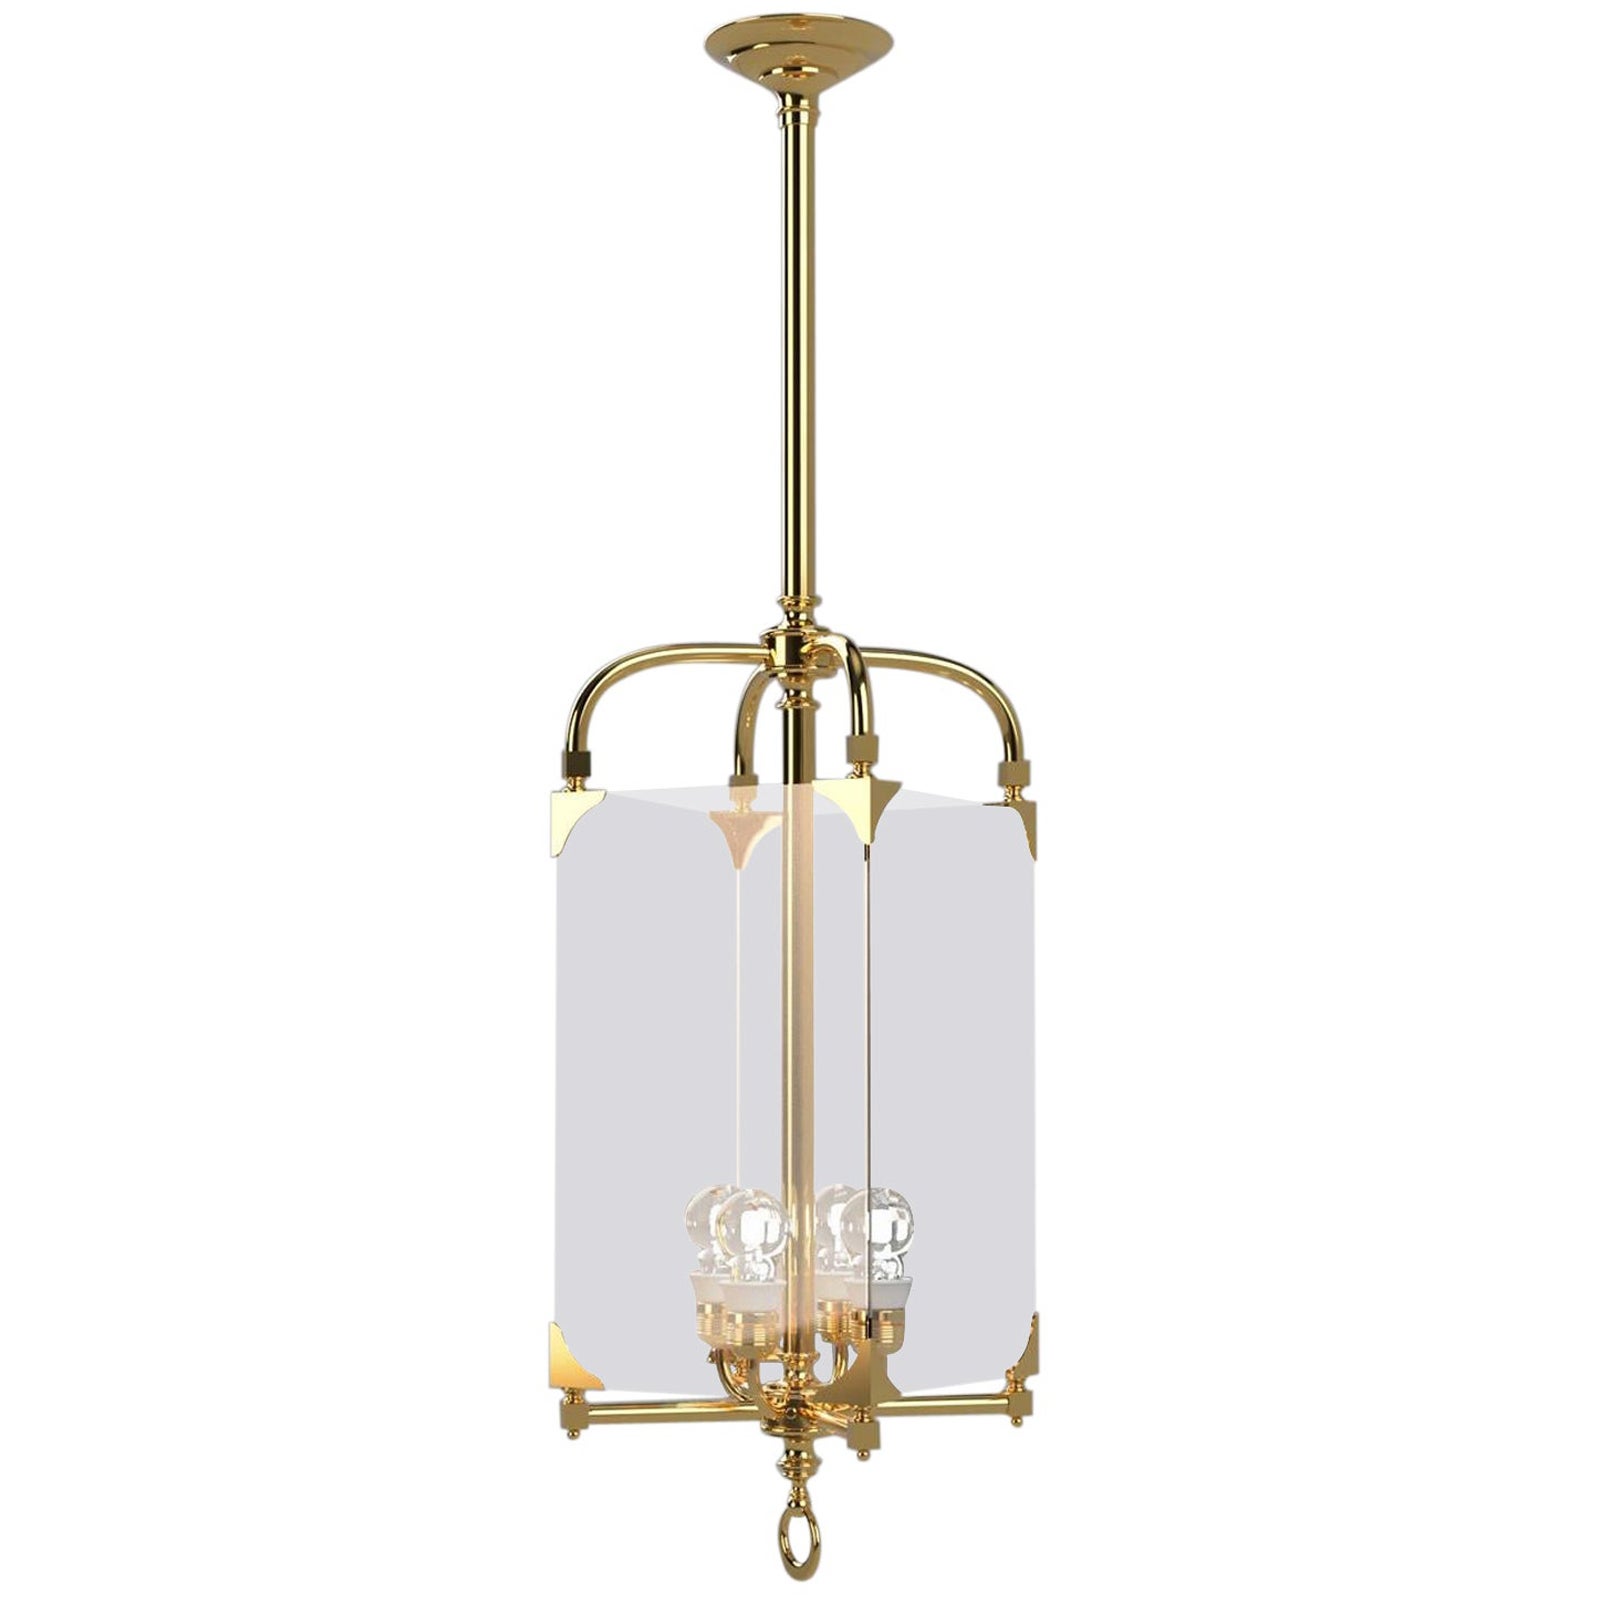 Adolf Loos Secession Jugendstil Glass and Brass Lantern Chandelier Re-Edition